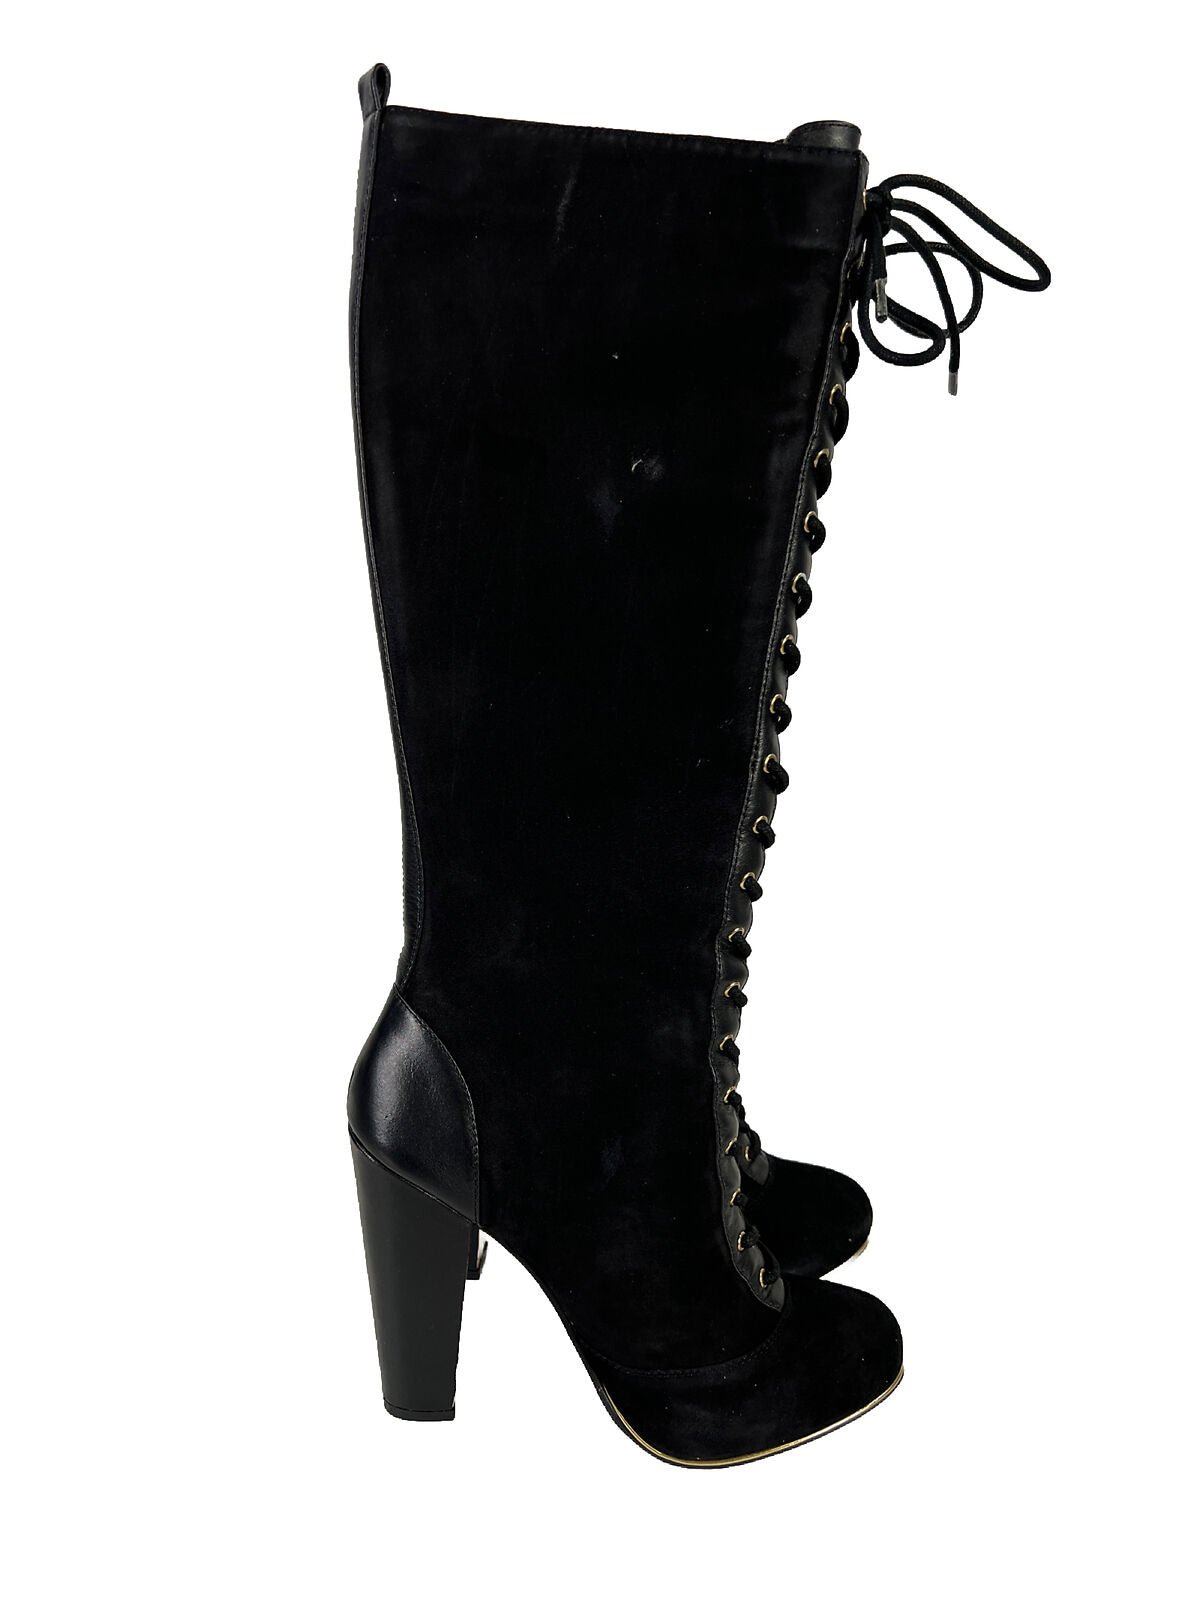 NEW Vogue Women's Black Suede Dancing Queen Knee High Lace Up Boots - 7.5